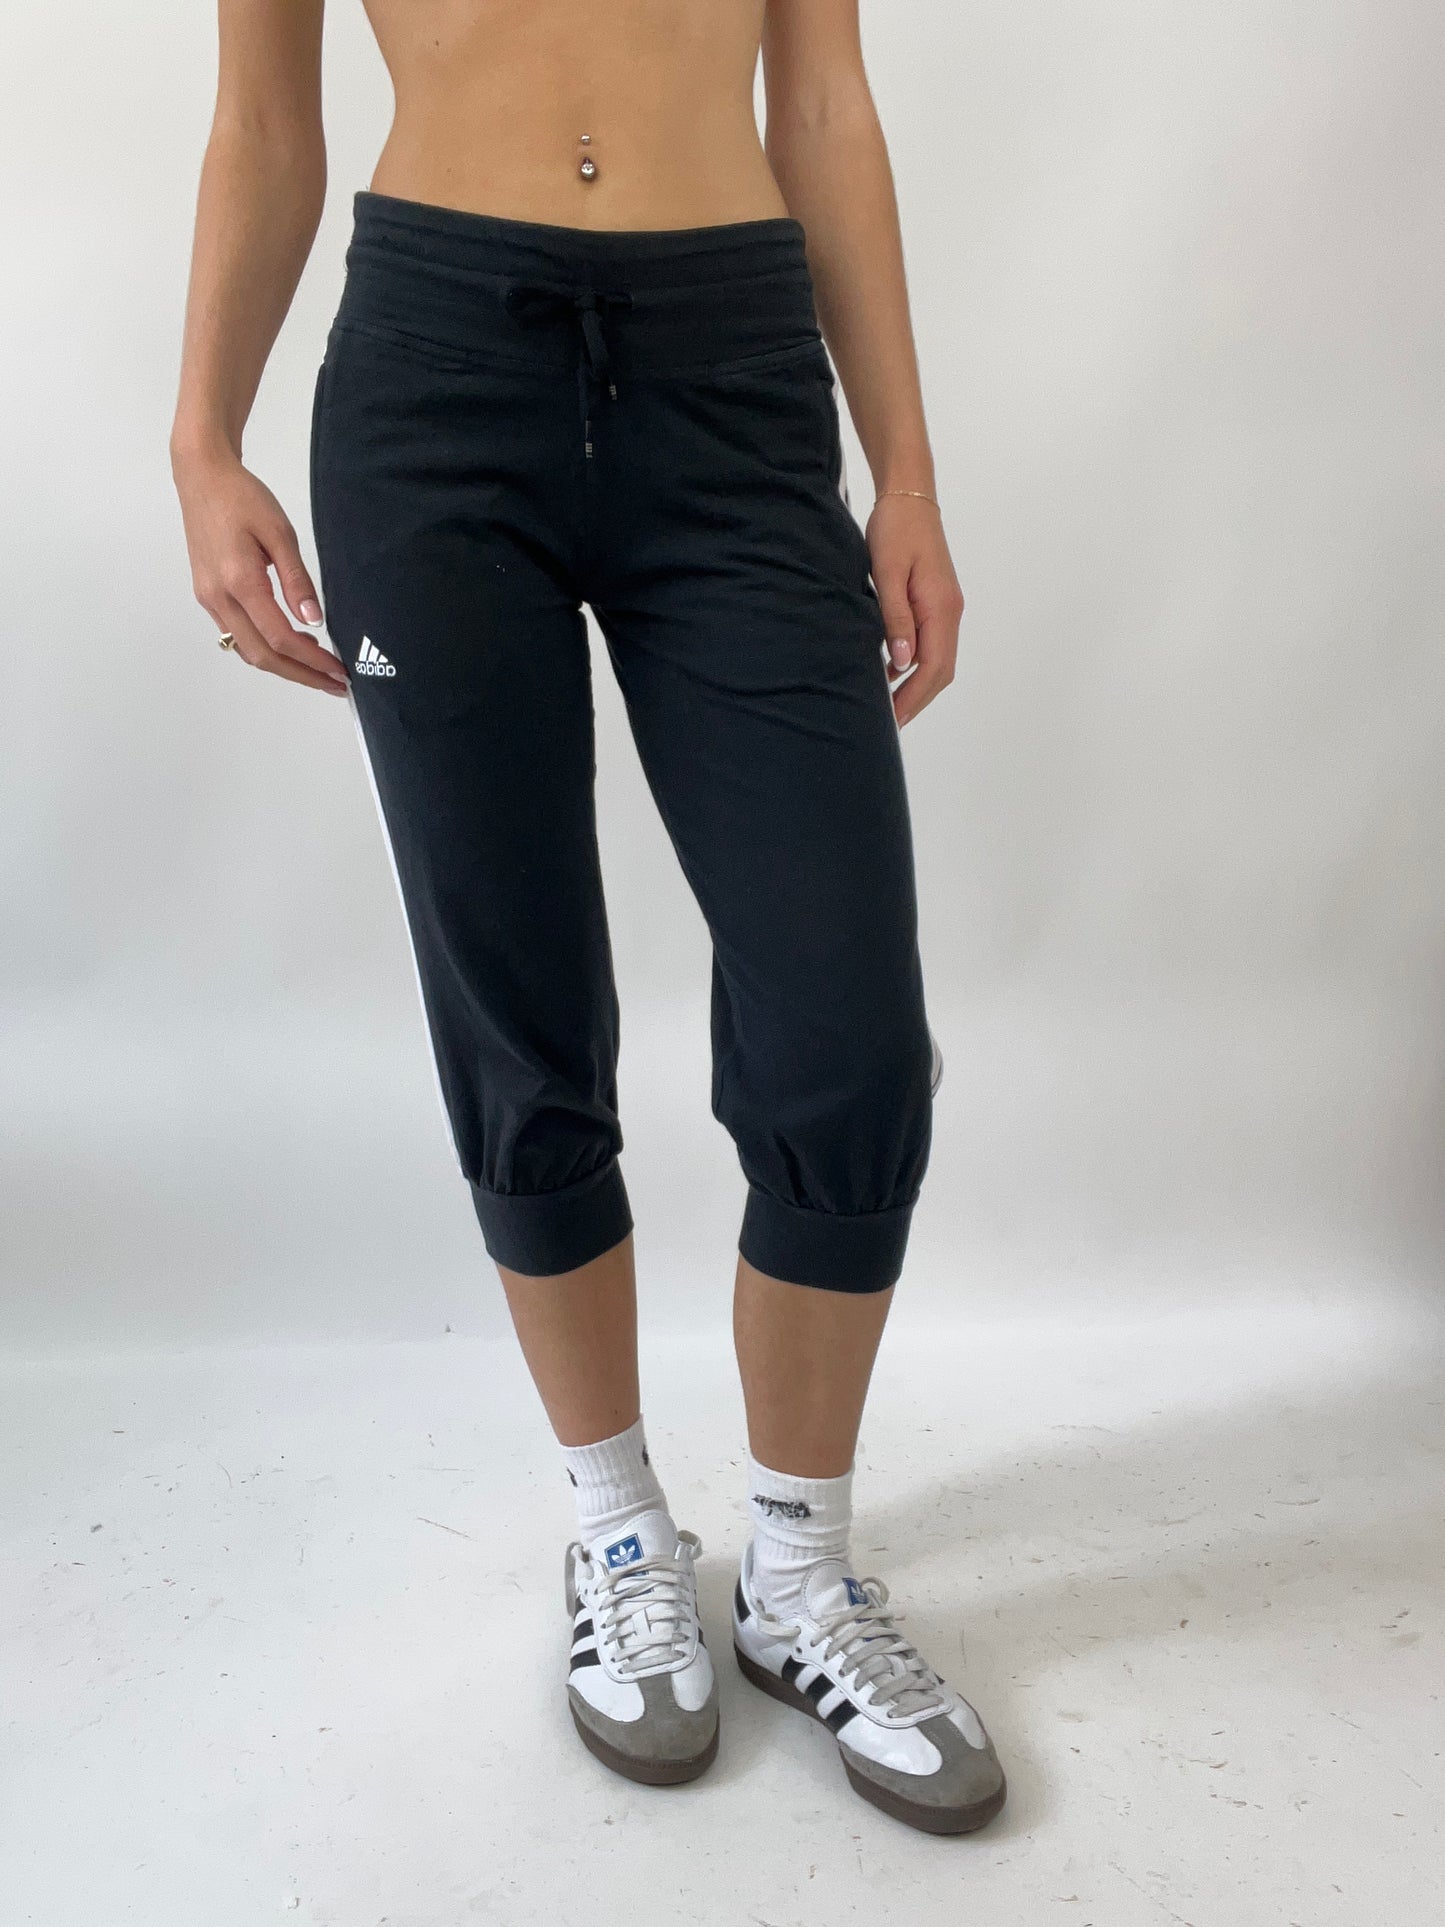 EUROS DROP | small black adidas 3/4 length leggings